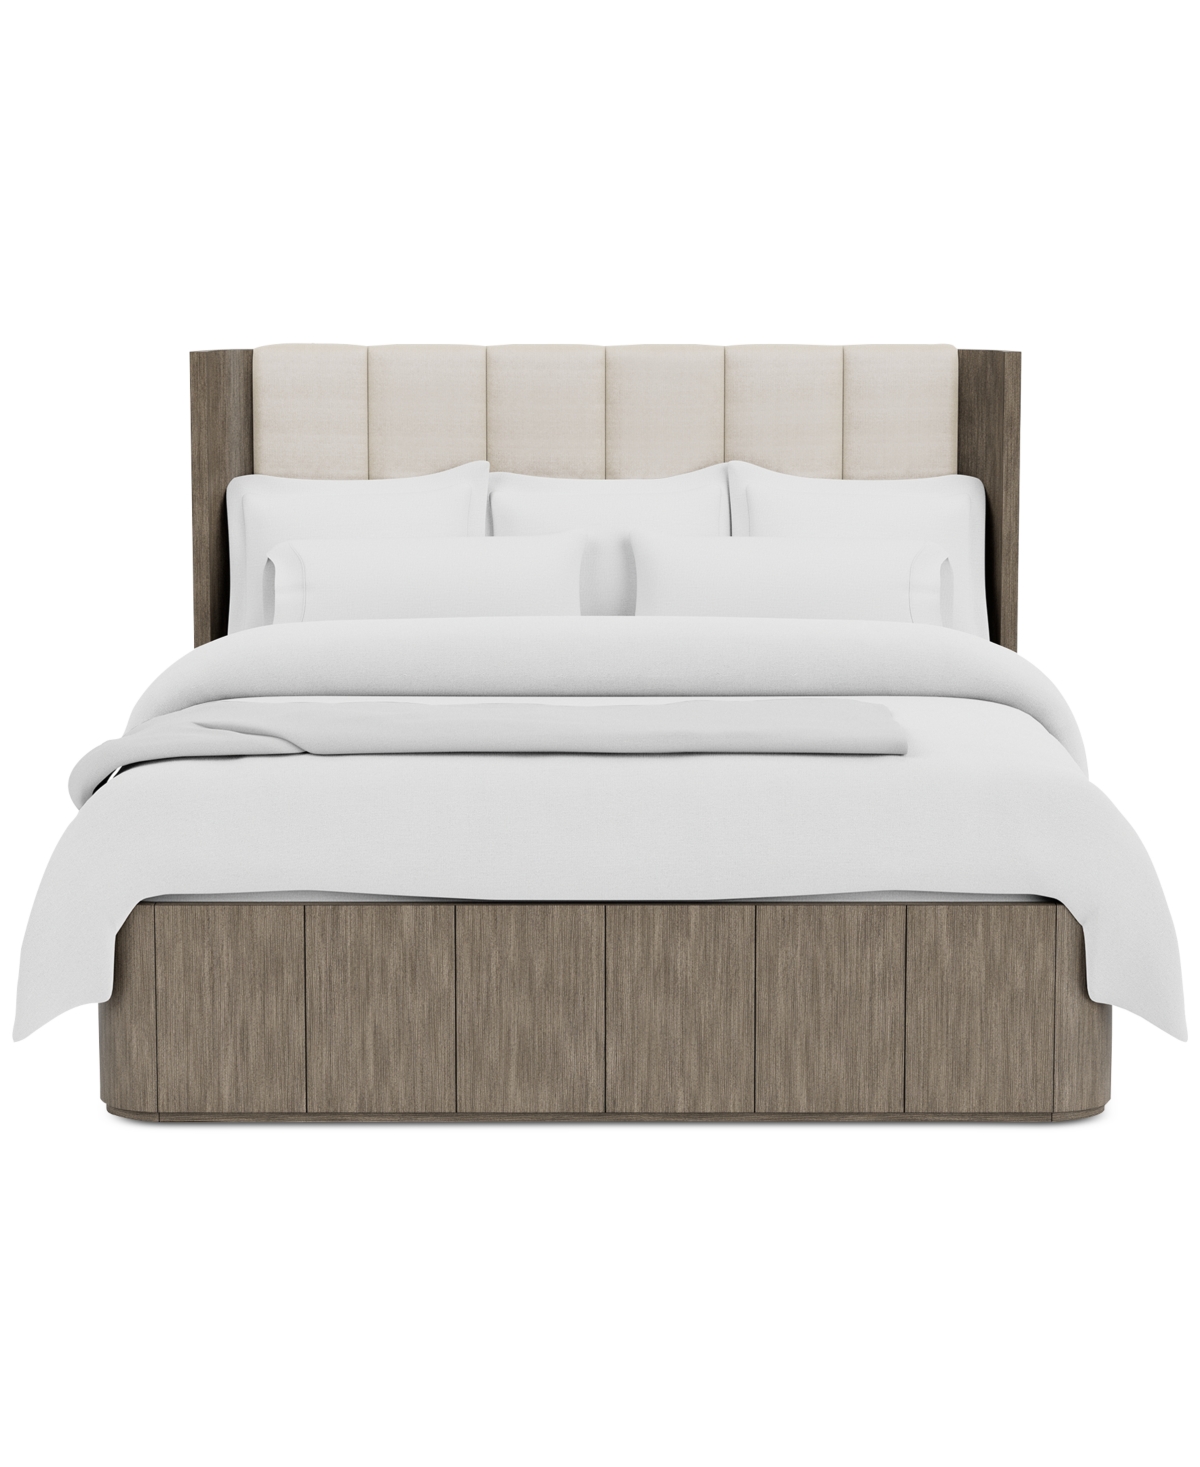 Macy's Frandlyn Queen Upholstered Bed In No Color